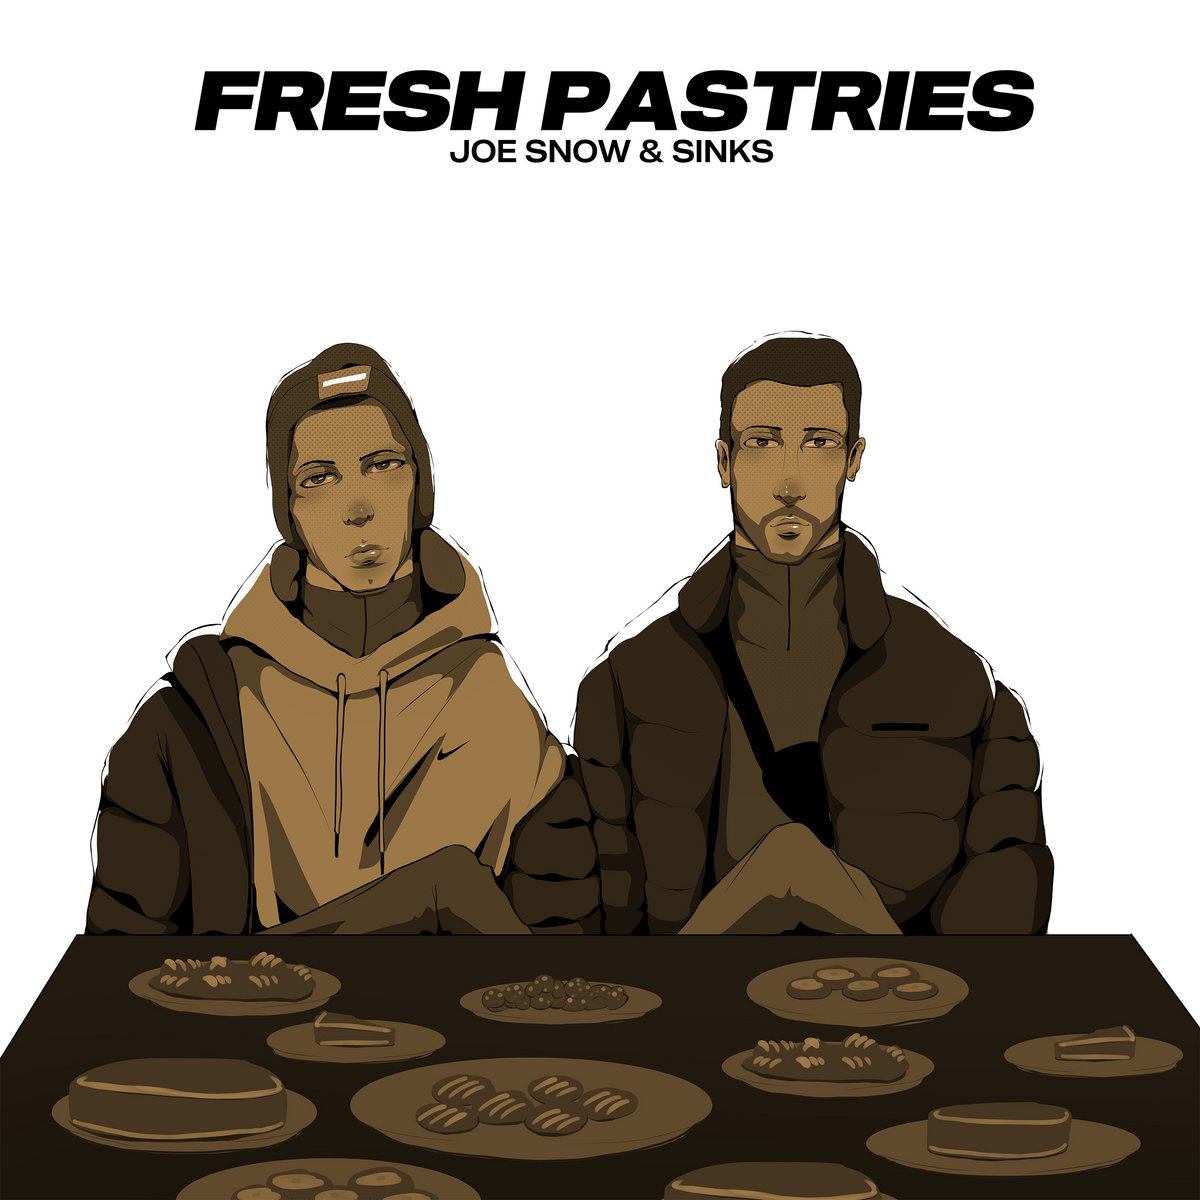 Fresh_pastries_joe_snow_sinks